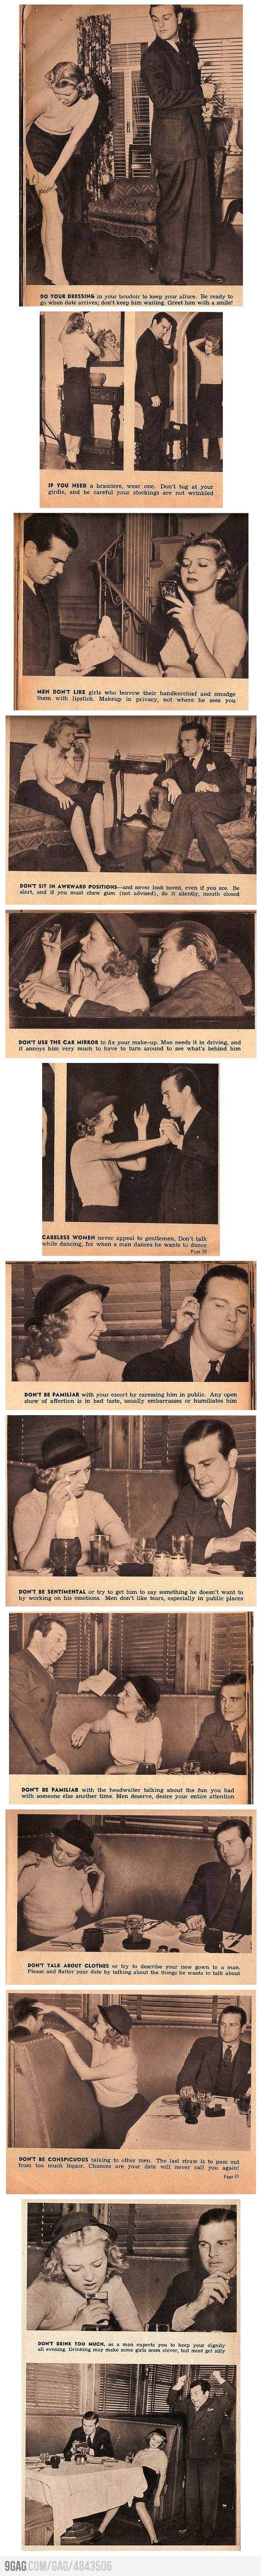 Dating Advice for Women circa 1950